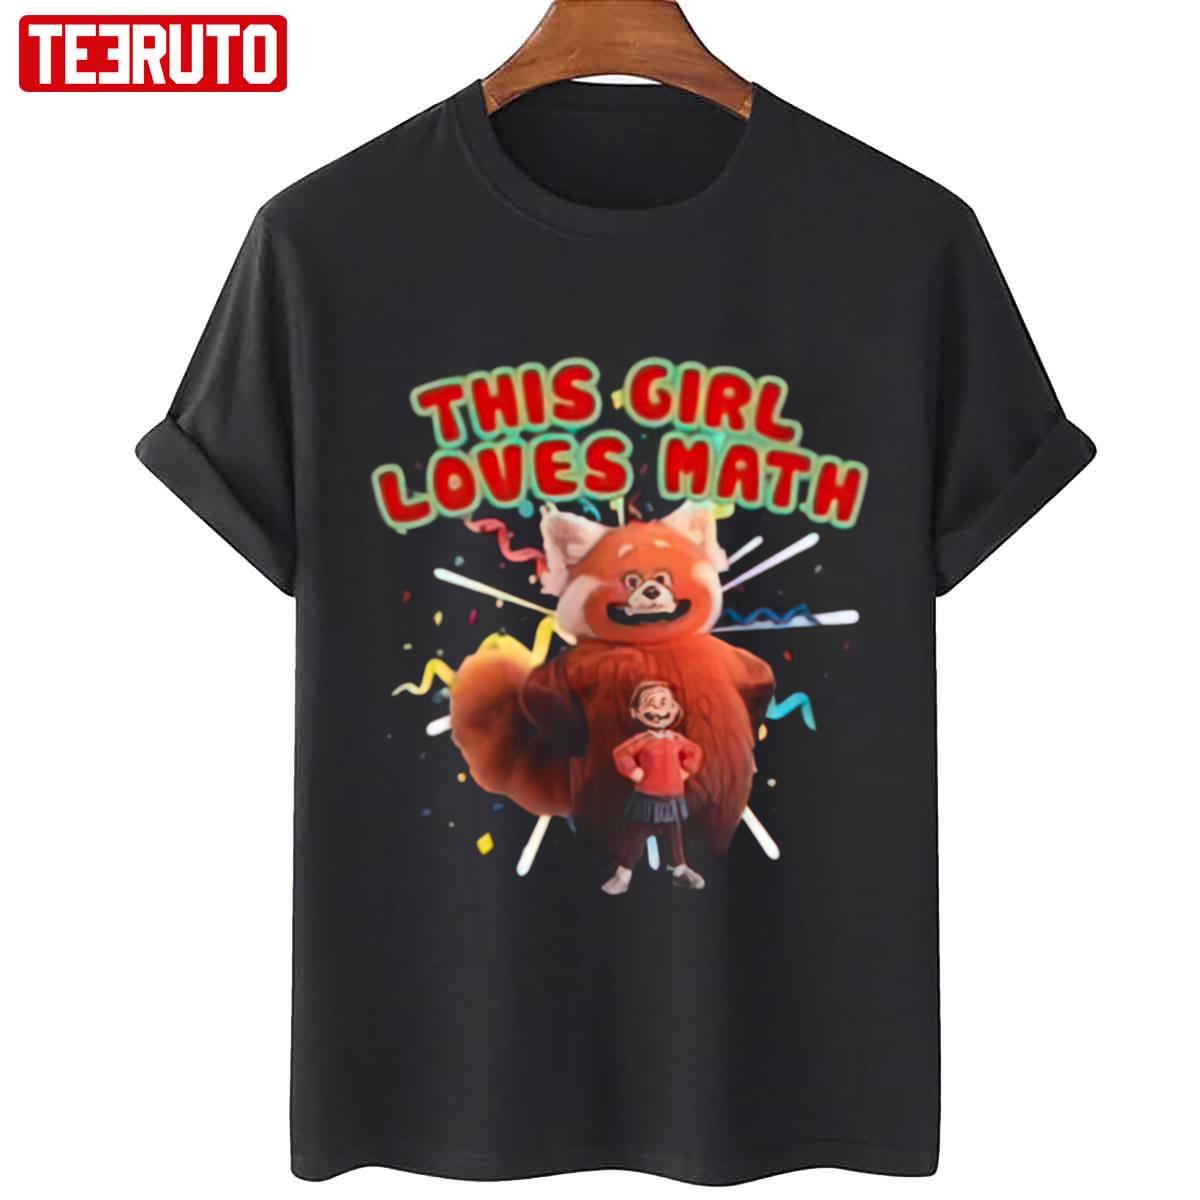 This Girl Loves Math From Turning Red Unisex Sweatshirt - Teeruto